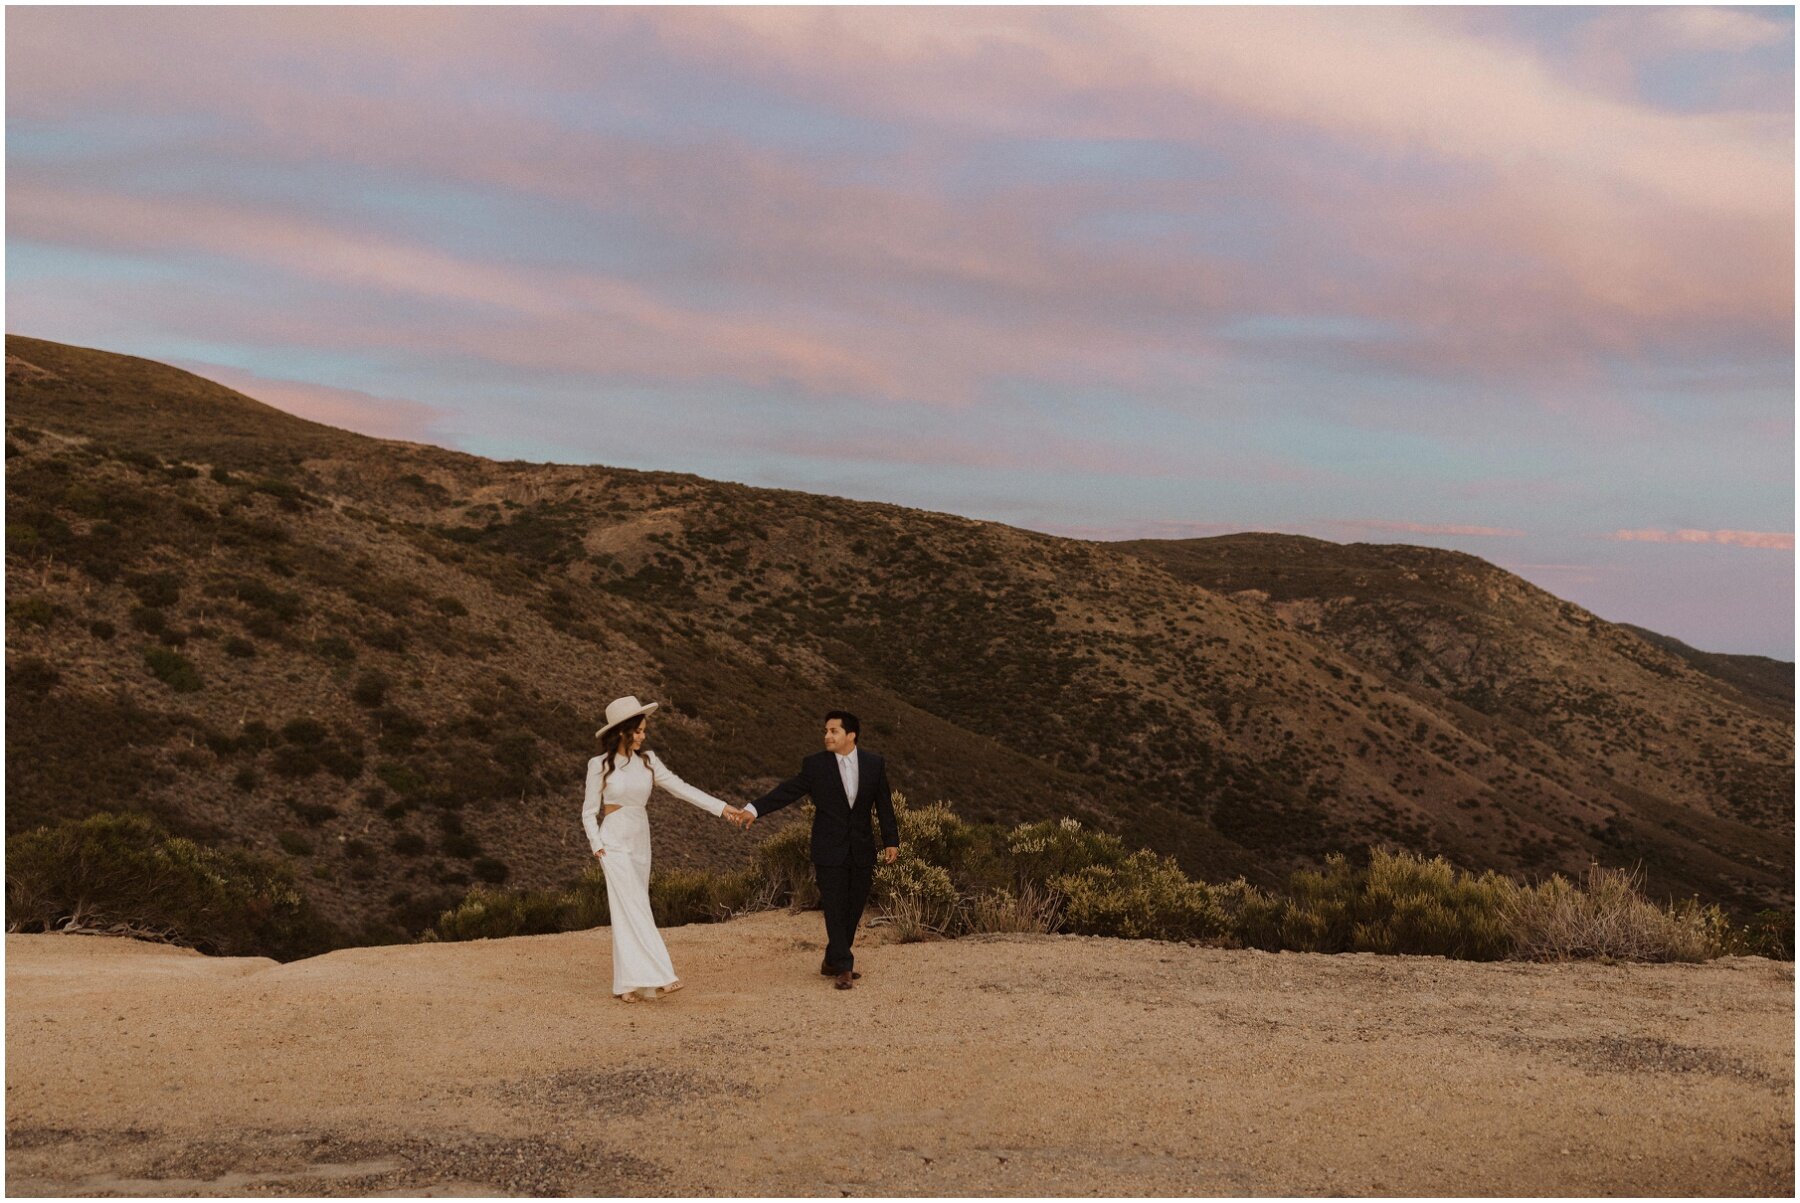 desert engagement session in california - erika greene photography - couples photographer_0021.jpg